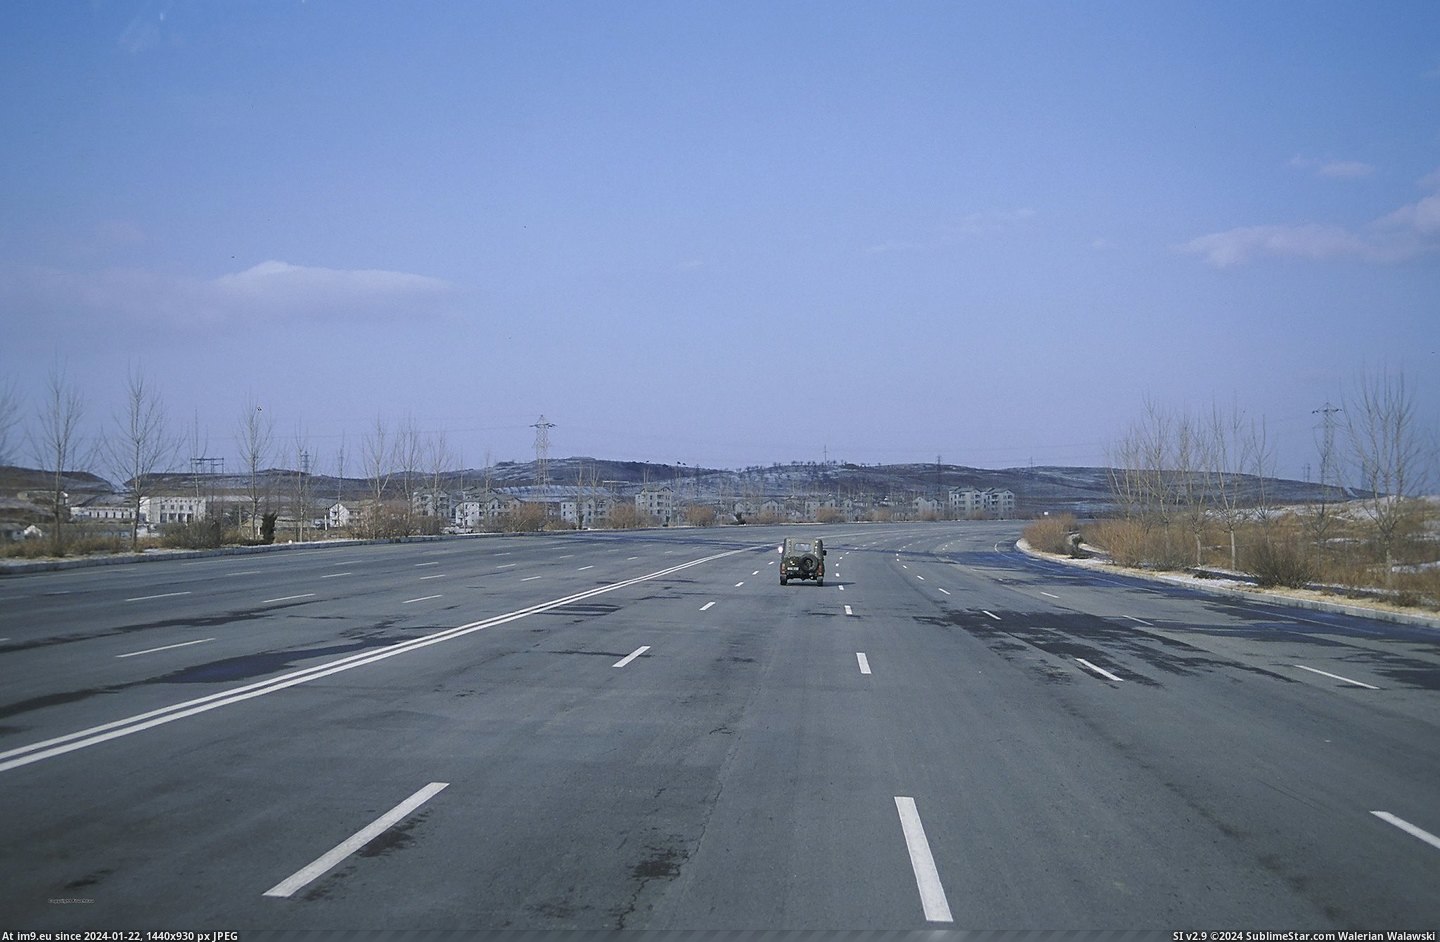 #North #Empty #Highways #Korea [Pics] The empty highways of North Korea. Pic. (Image of album My r/PICS favs))